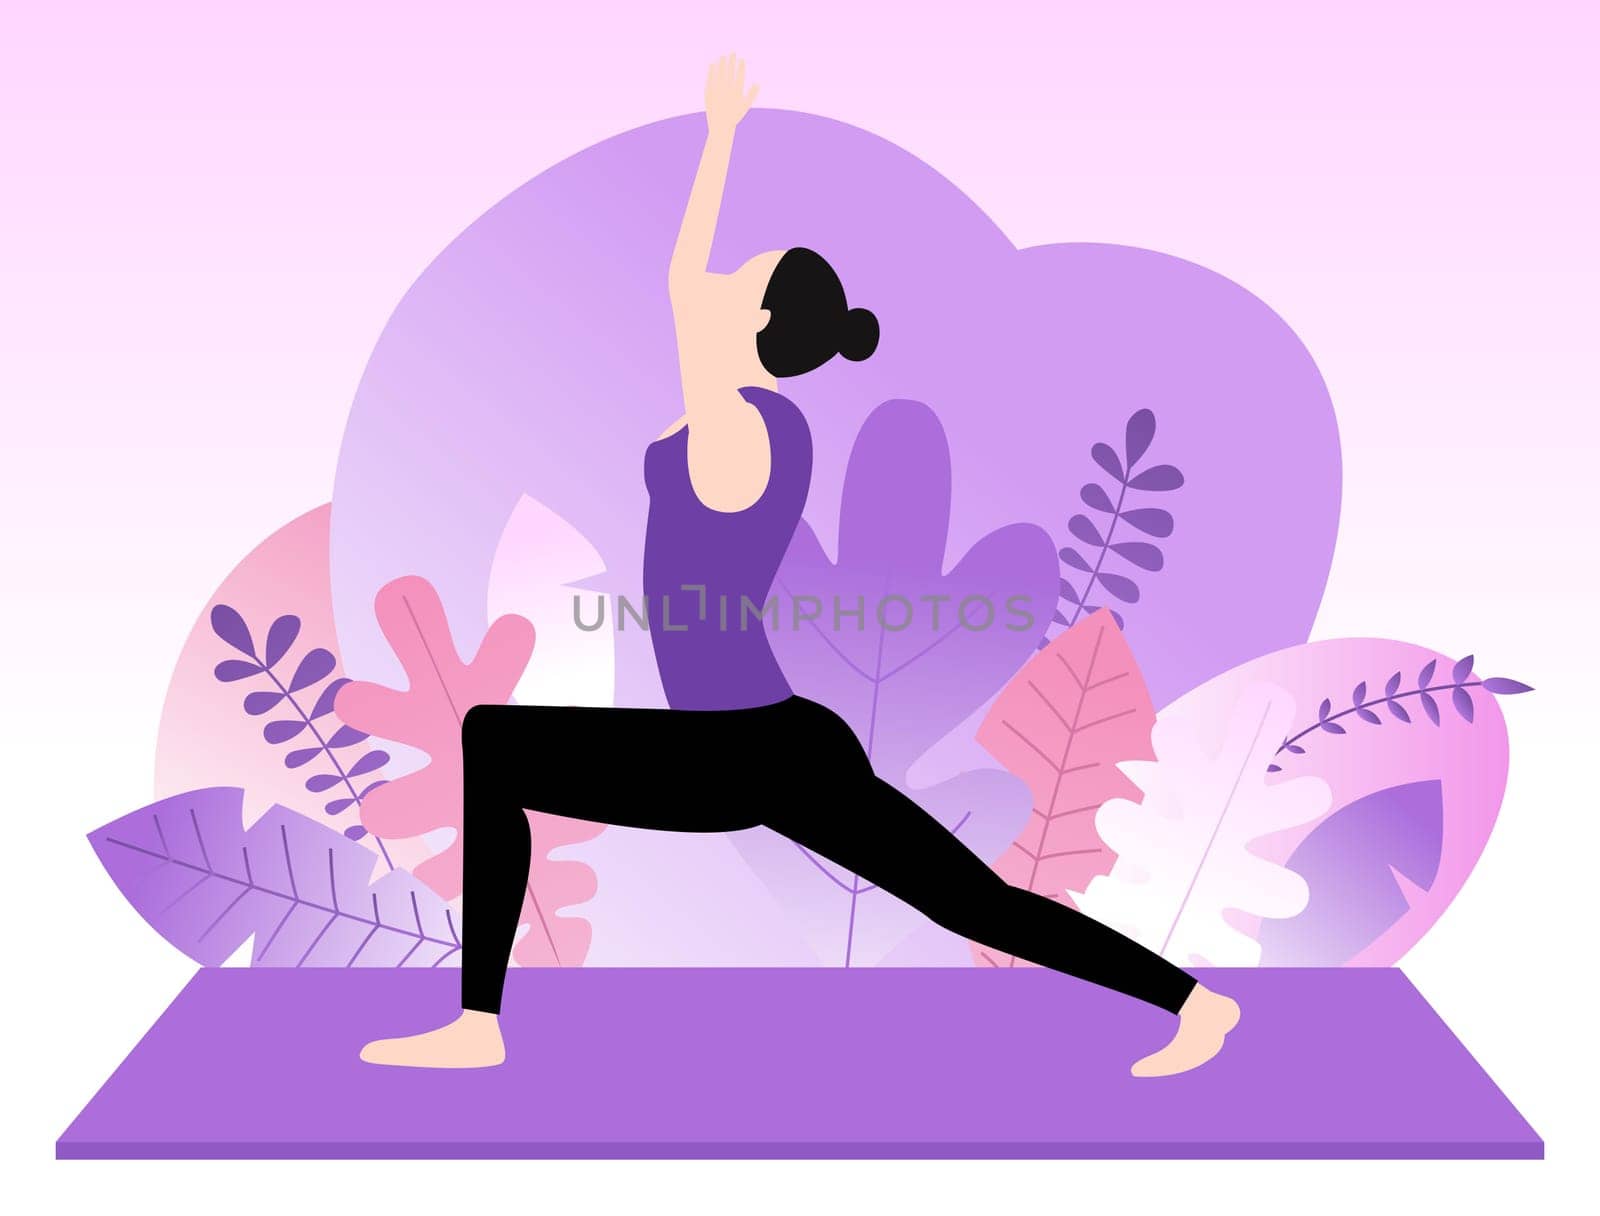 sports,lunge,stretching,pilates,silhouette,yoga,purple,balance,exercise,illustration,leg,pink